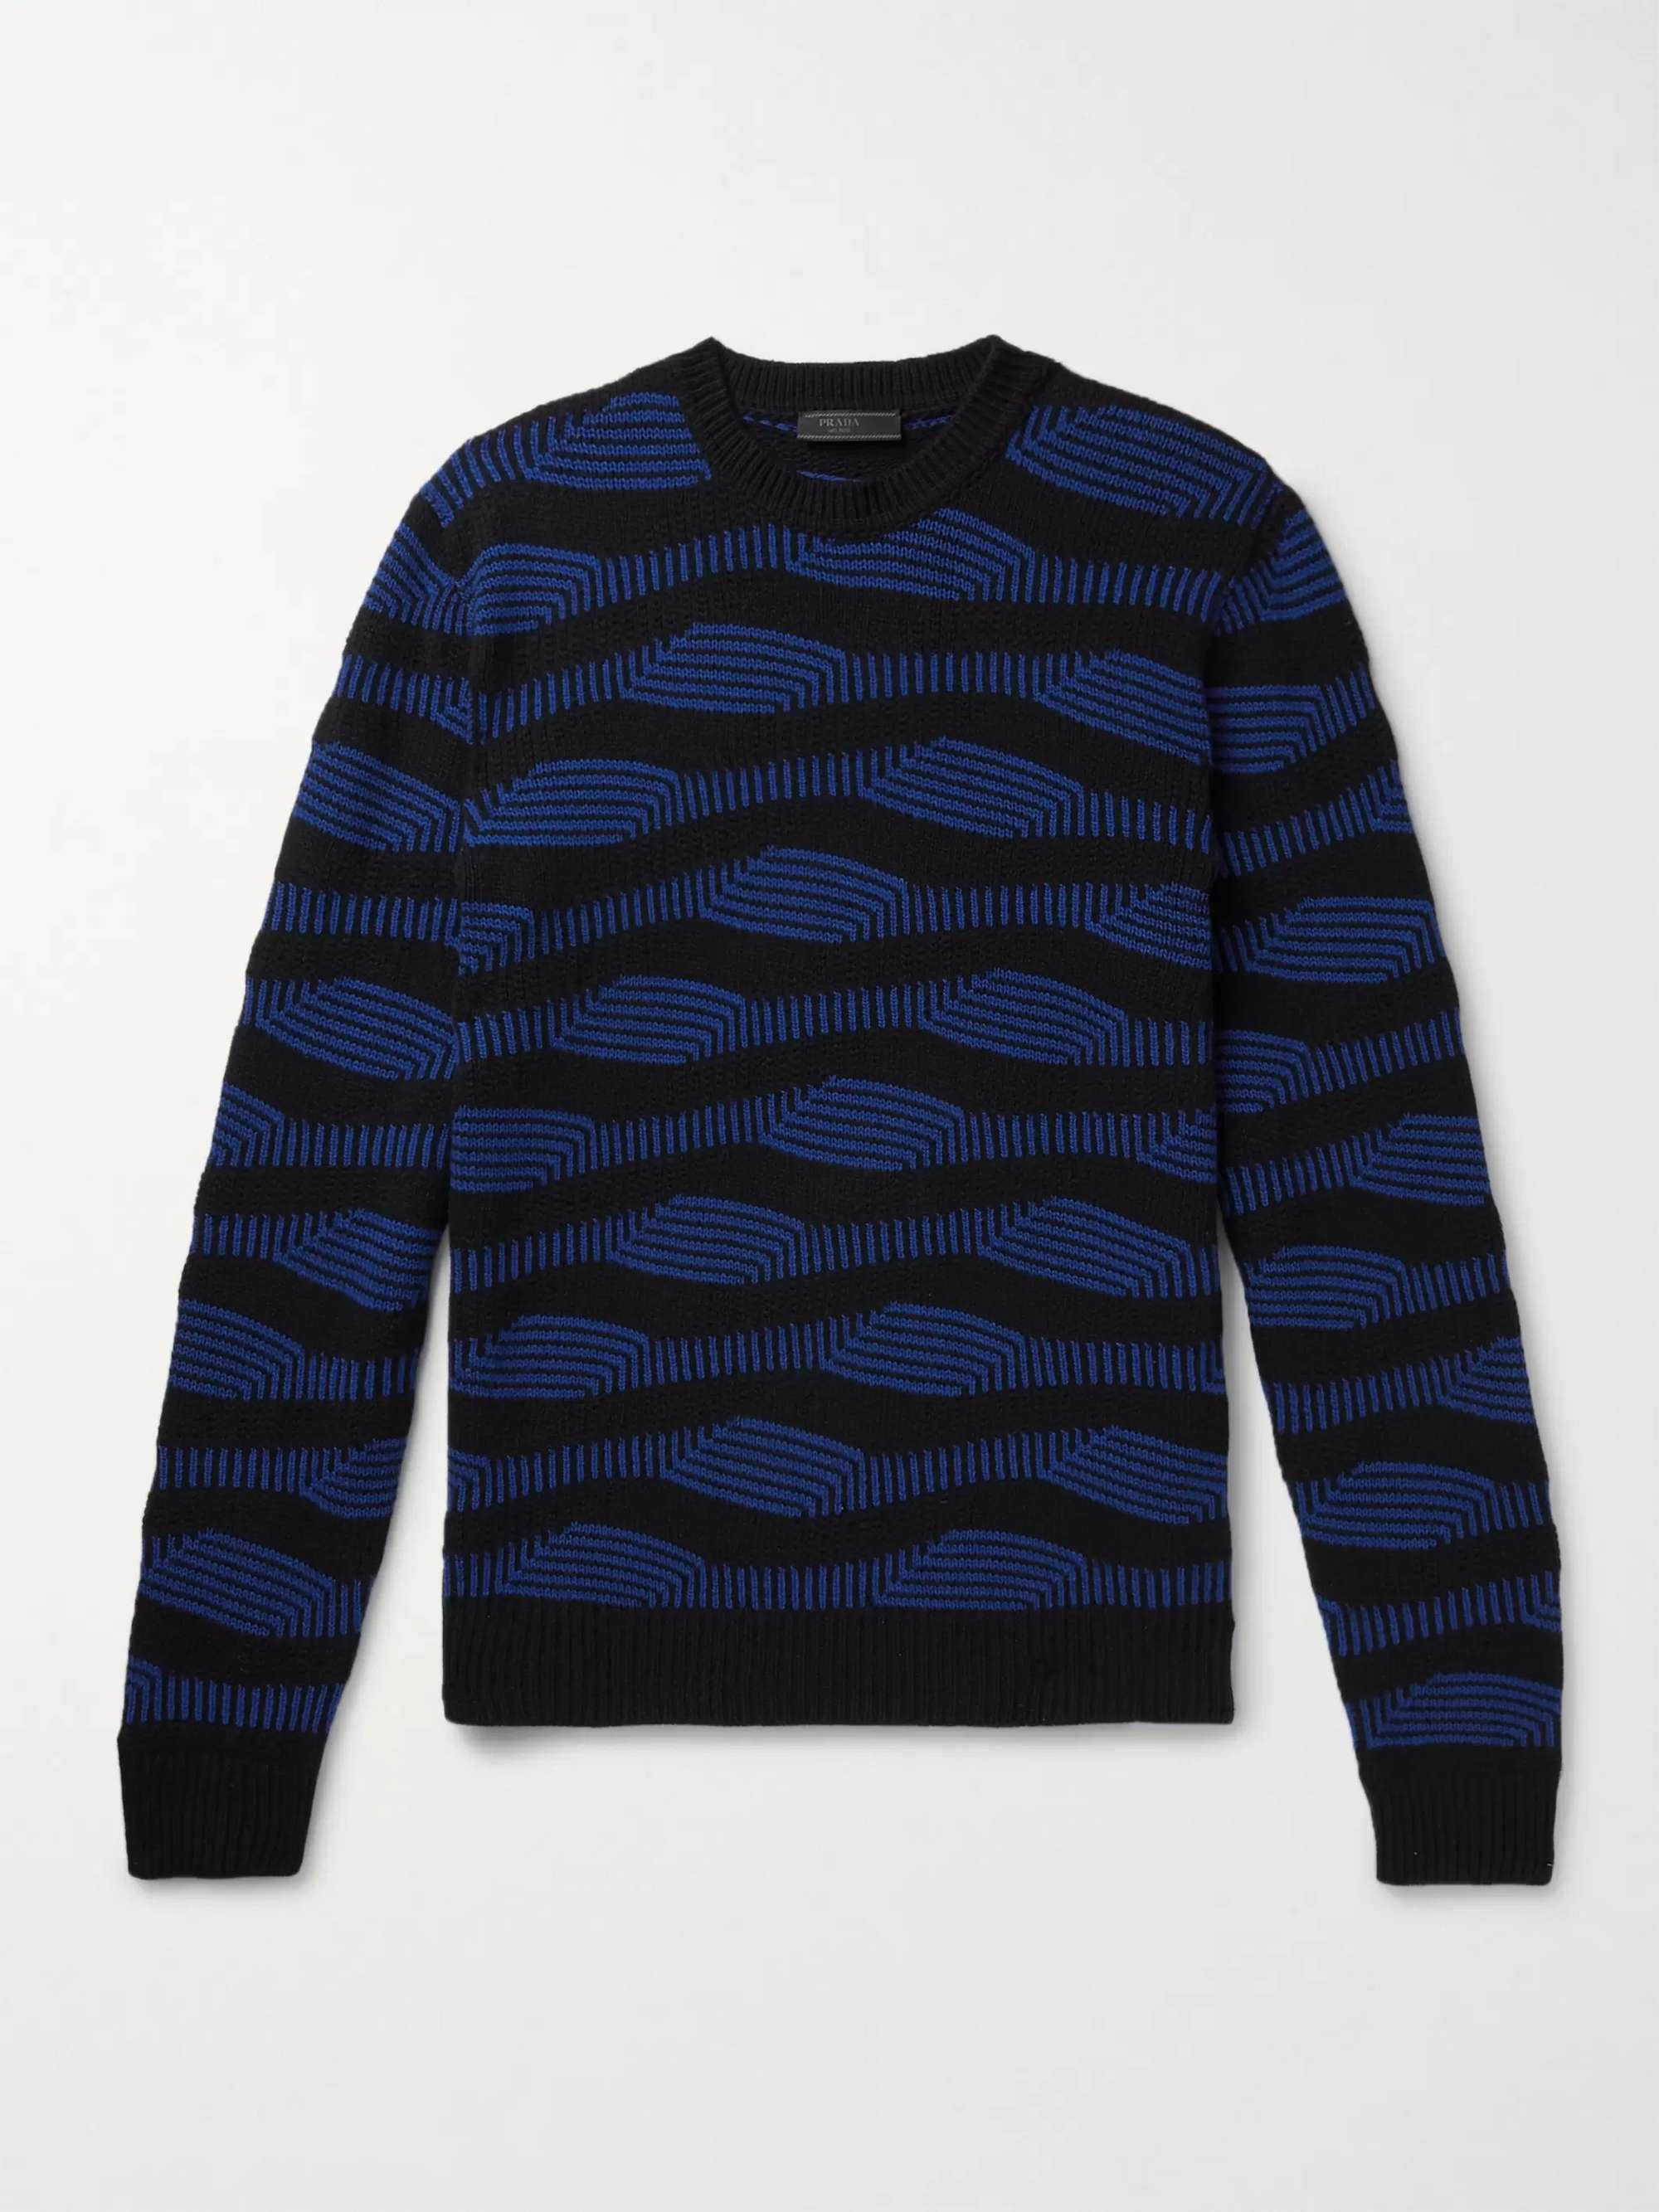 PRADA Intarsia Virgin Wool and Cashmere-Blend Sweater